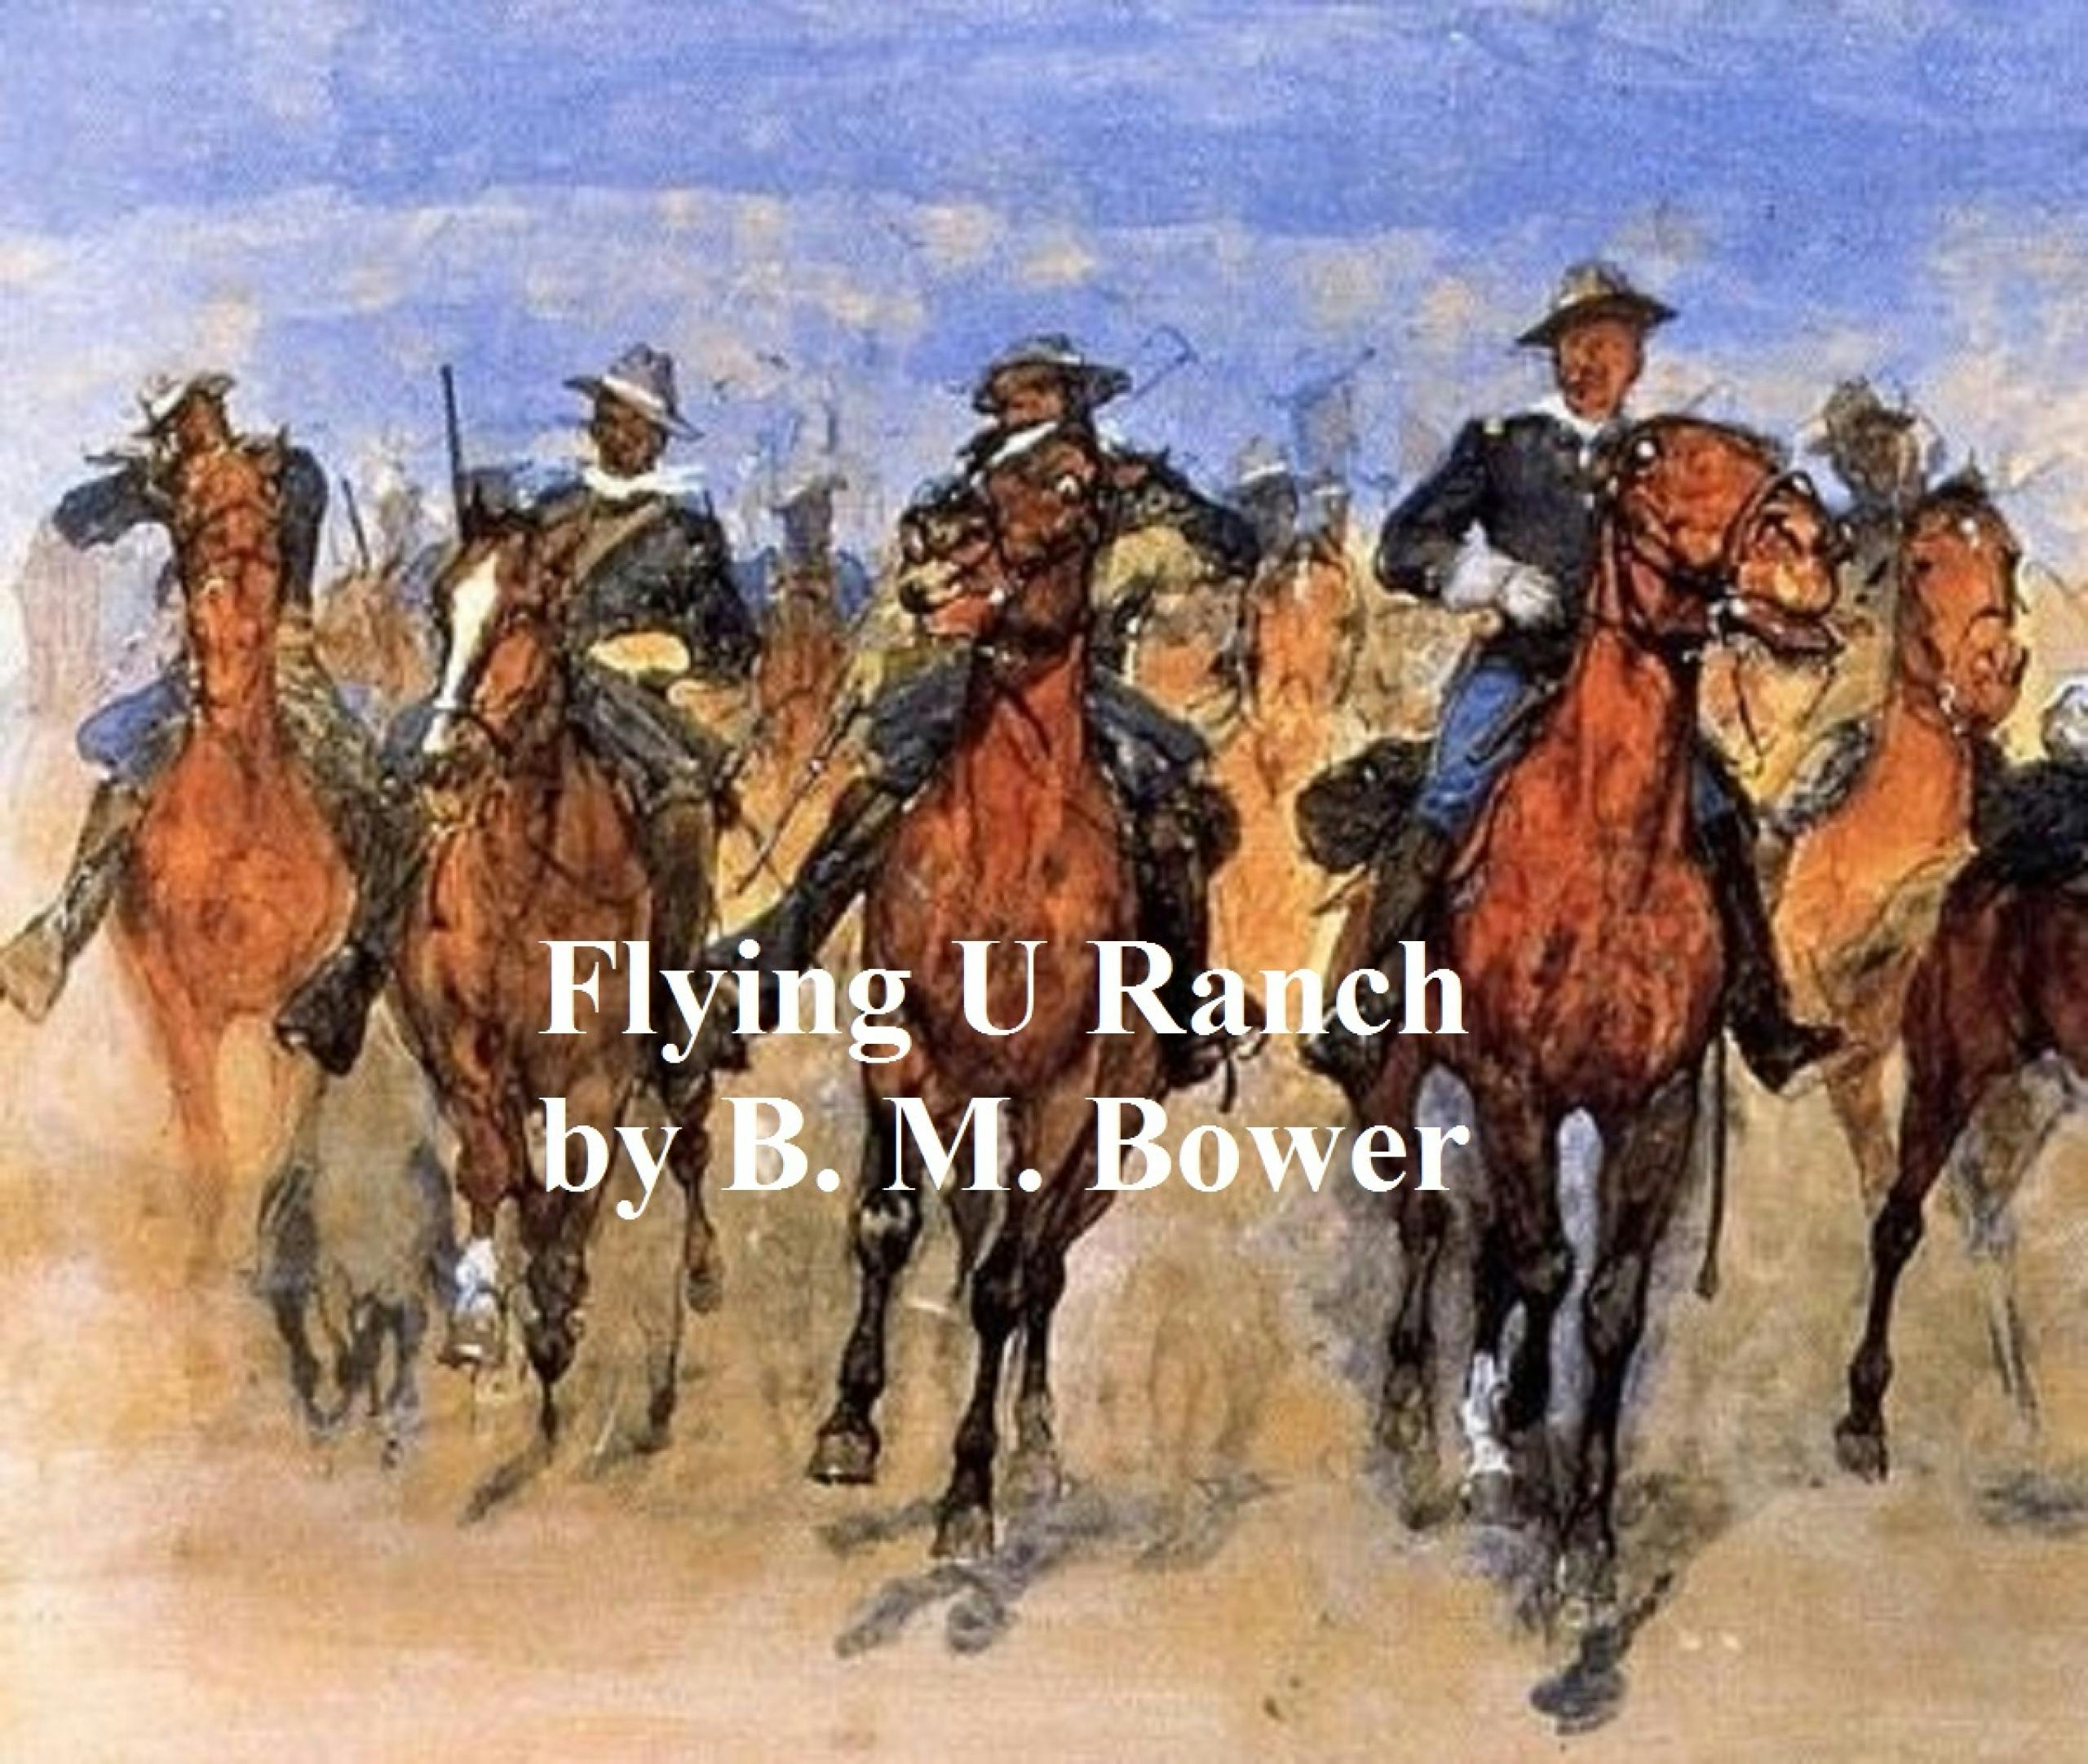 Flying U Ranch - B. M. Bower